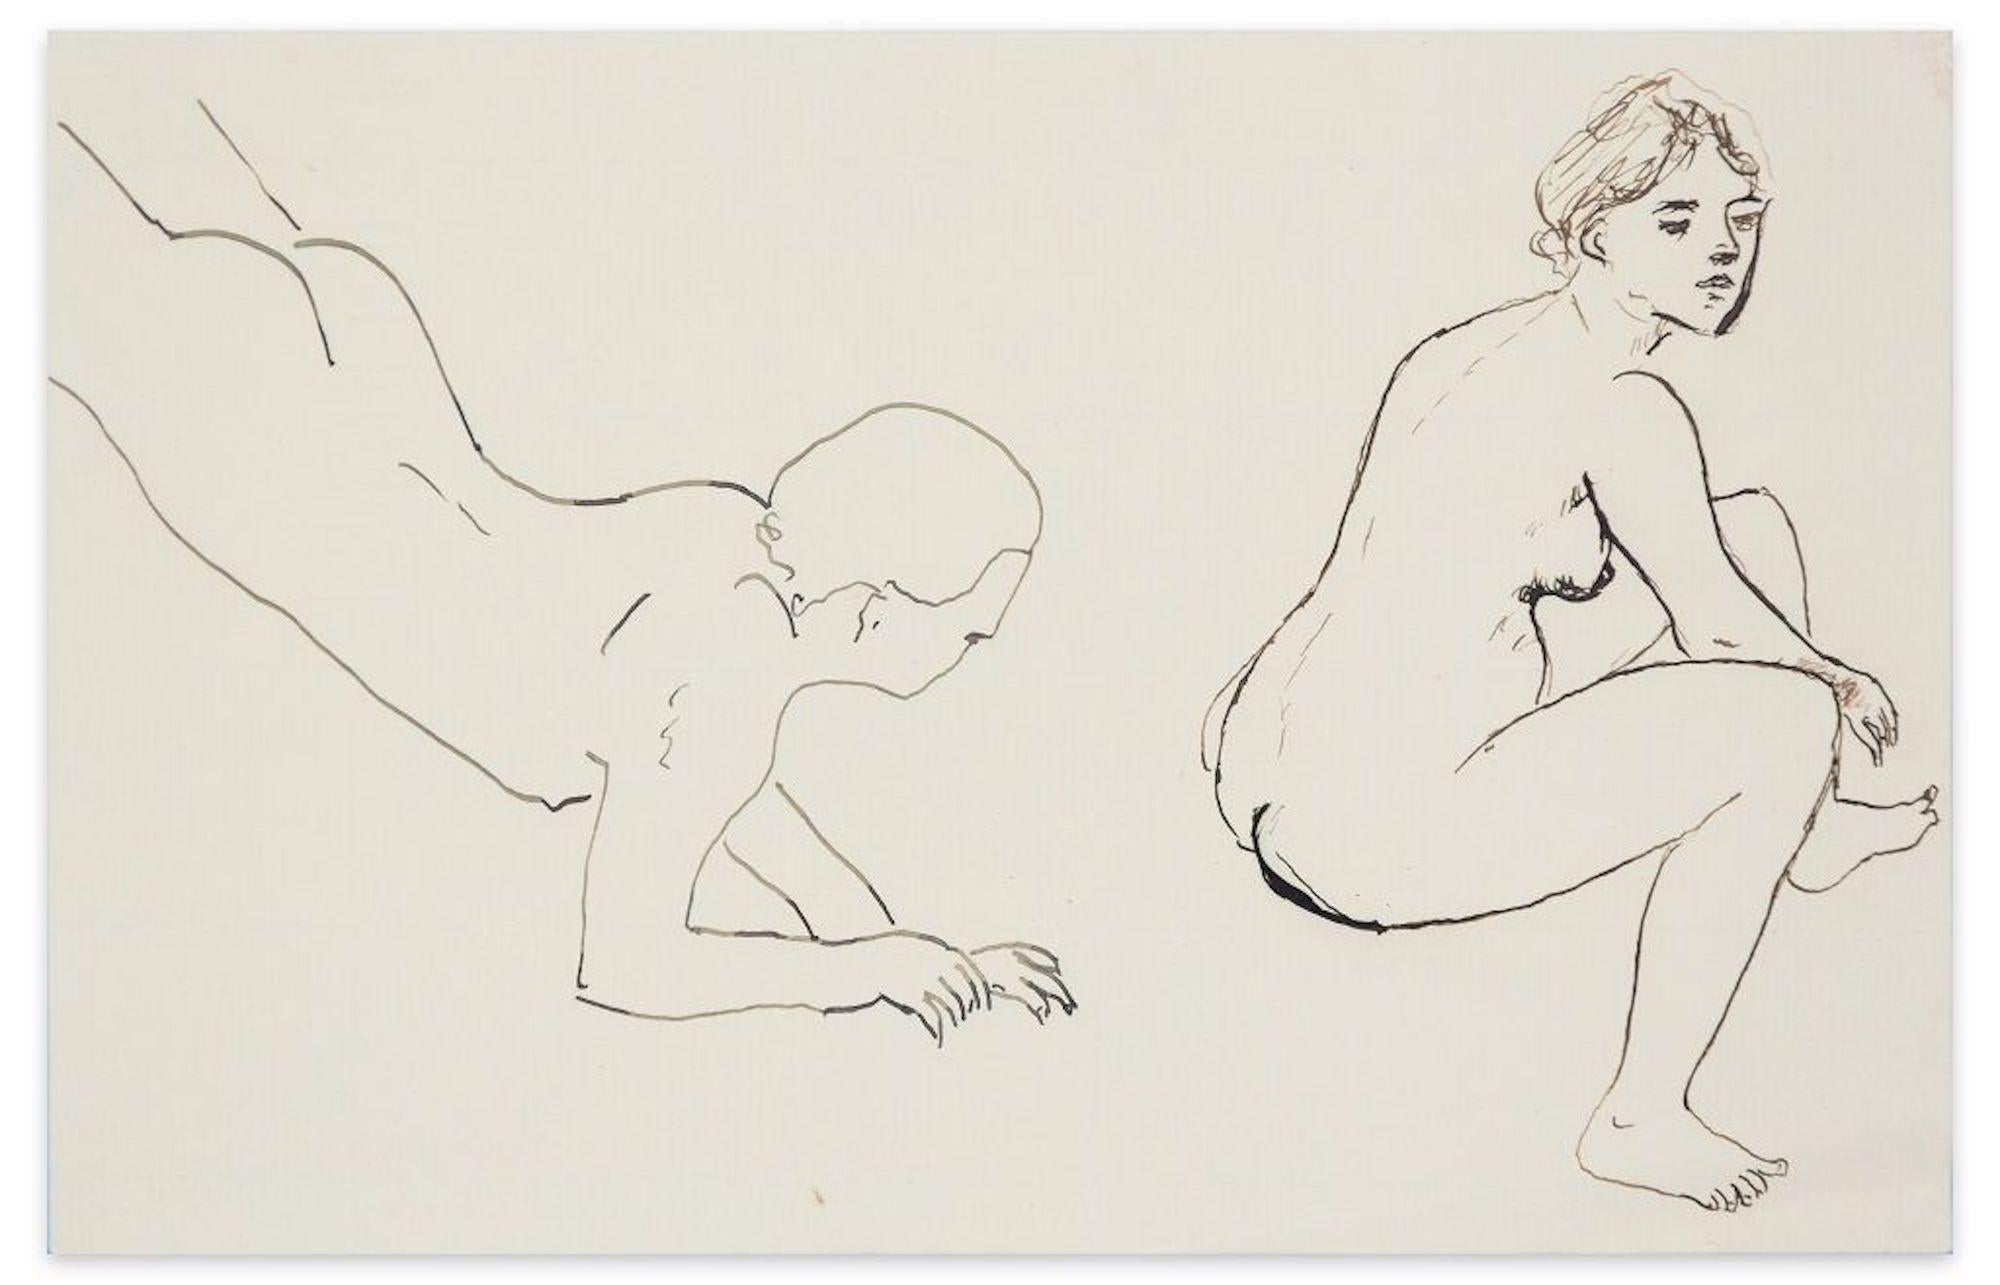 Erotic Look - China Ink Drawing by M. Vertès - 1930s